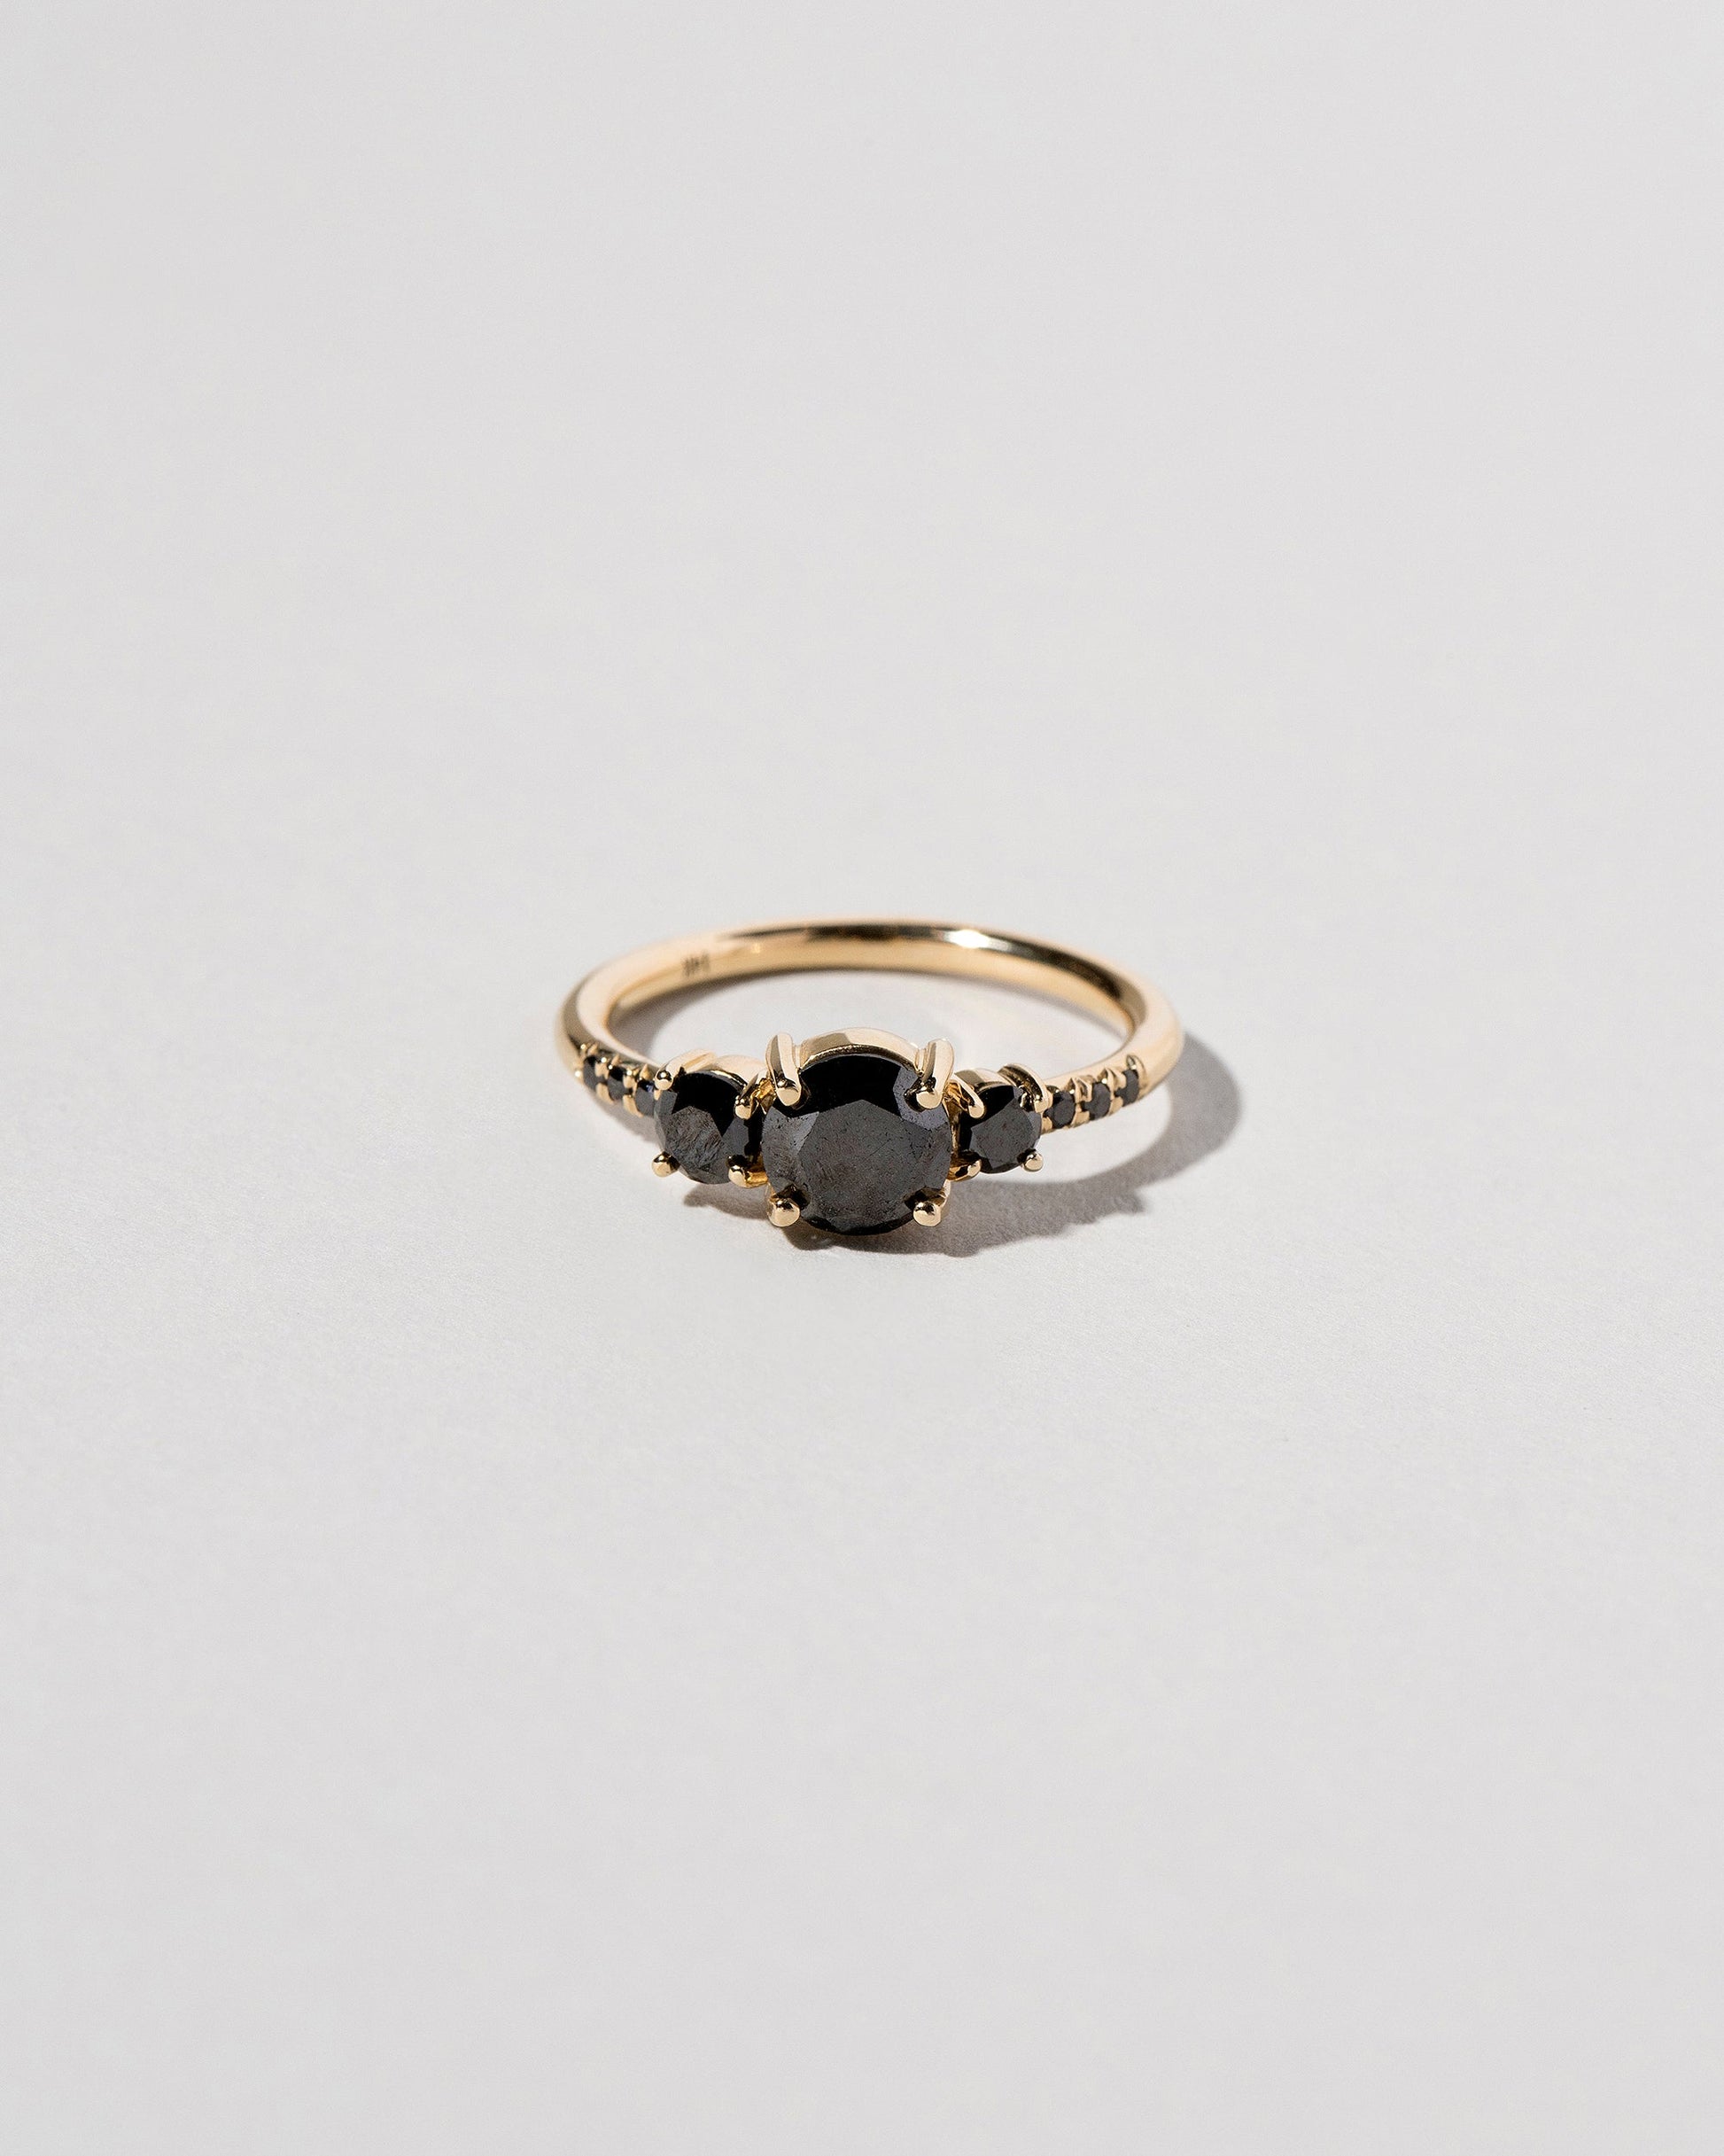  Orion Ring - Black Diamond on light color background.